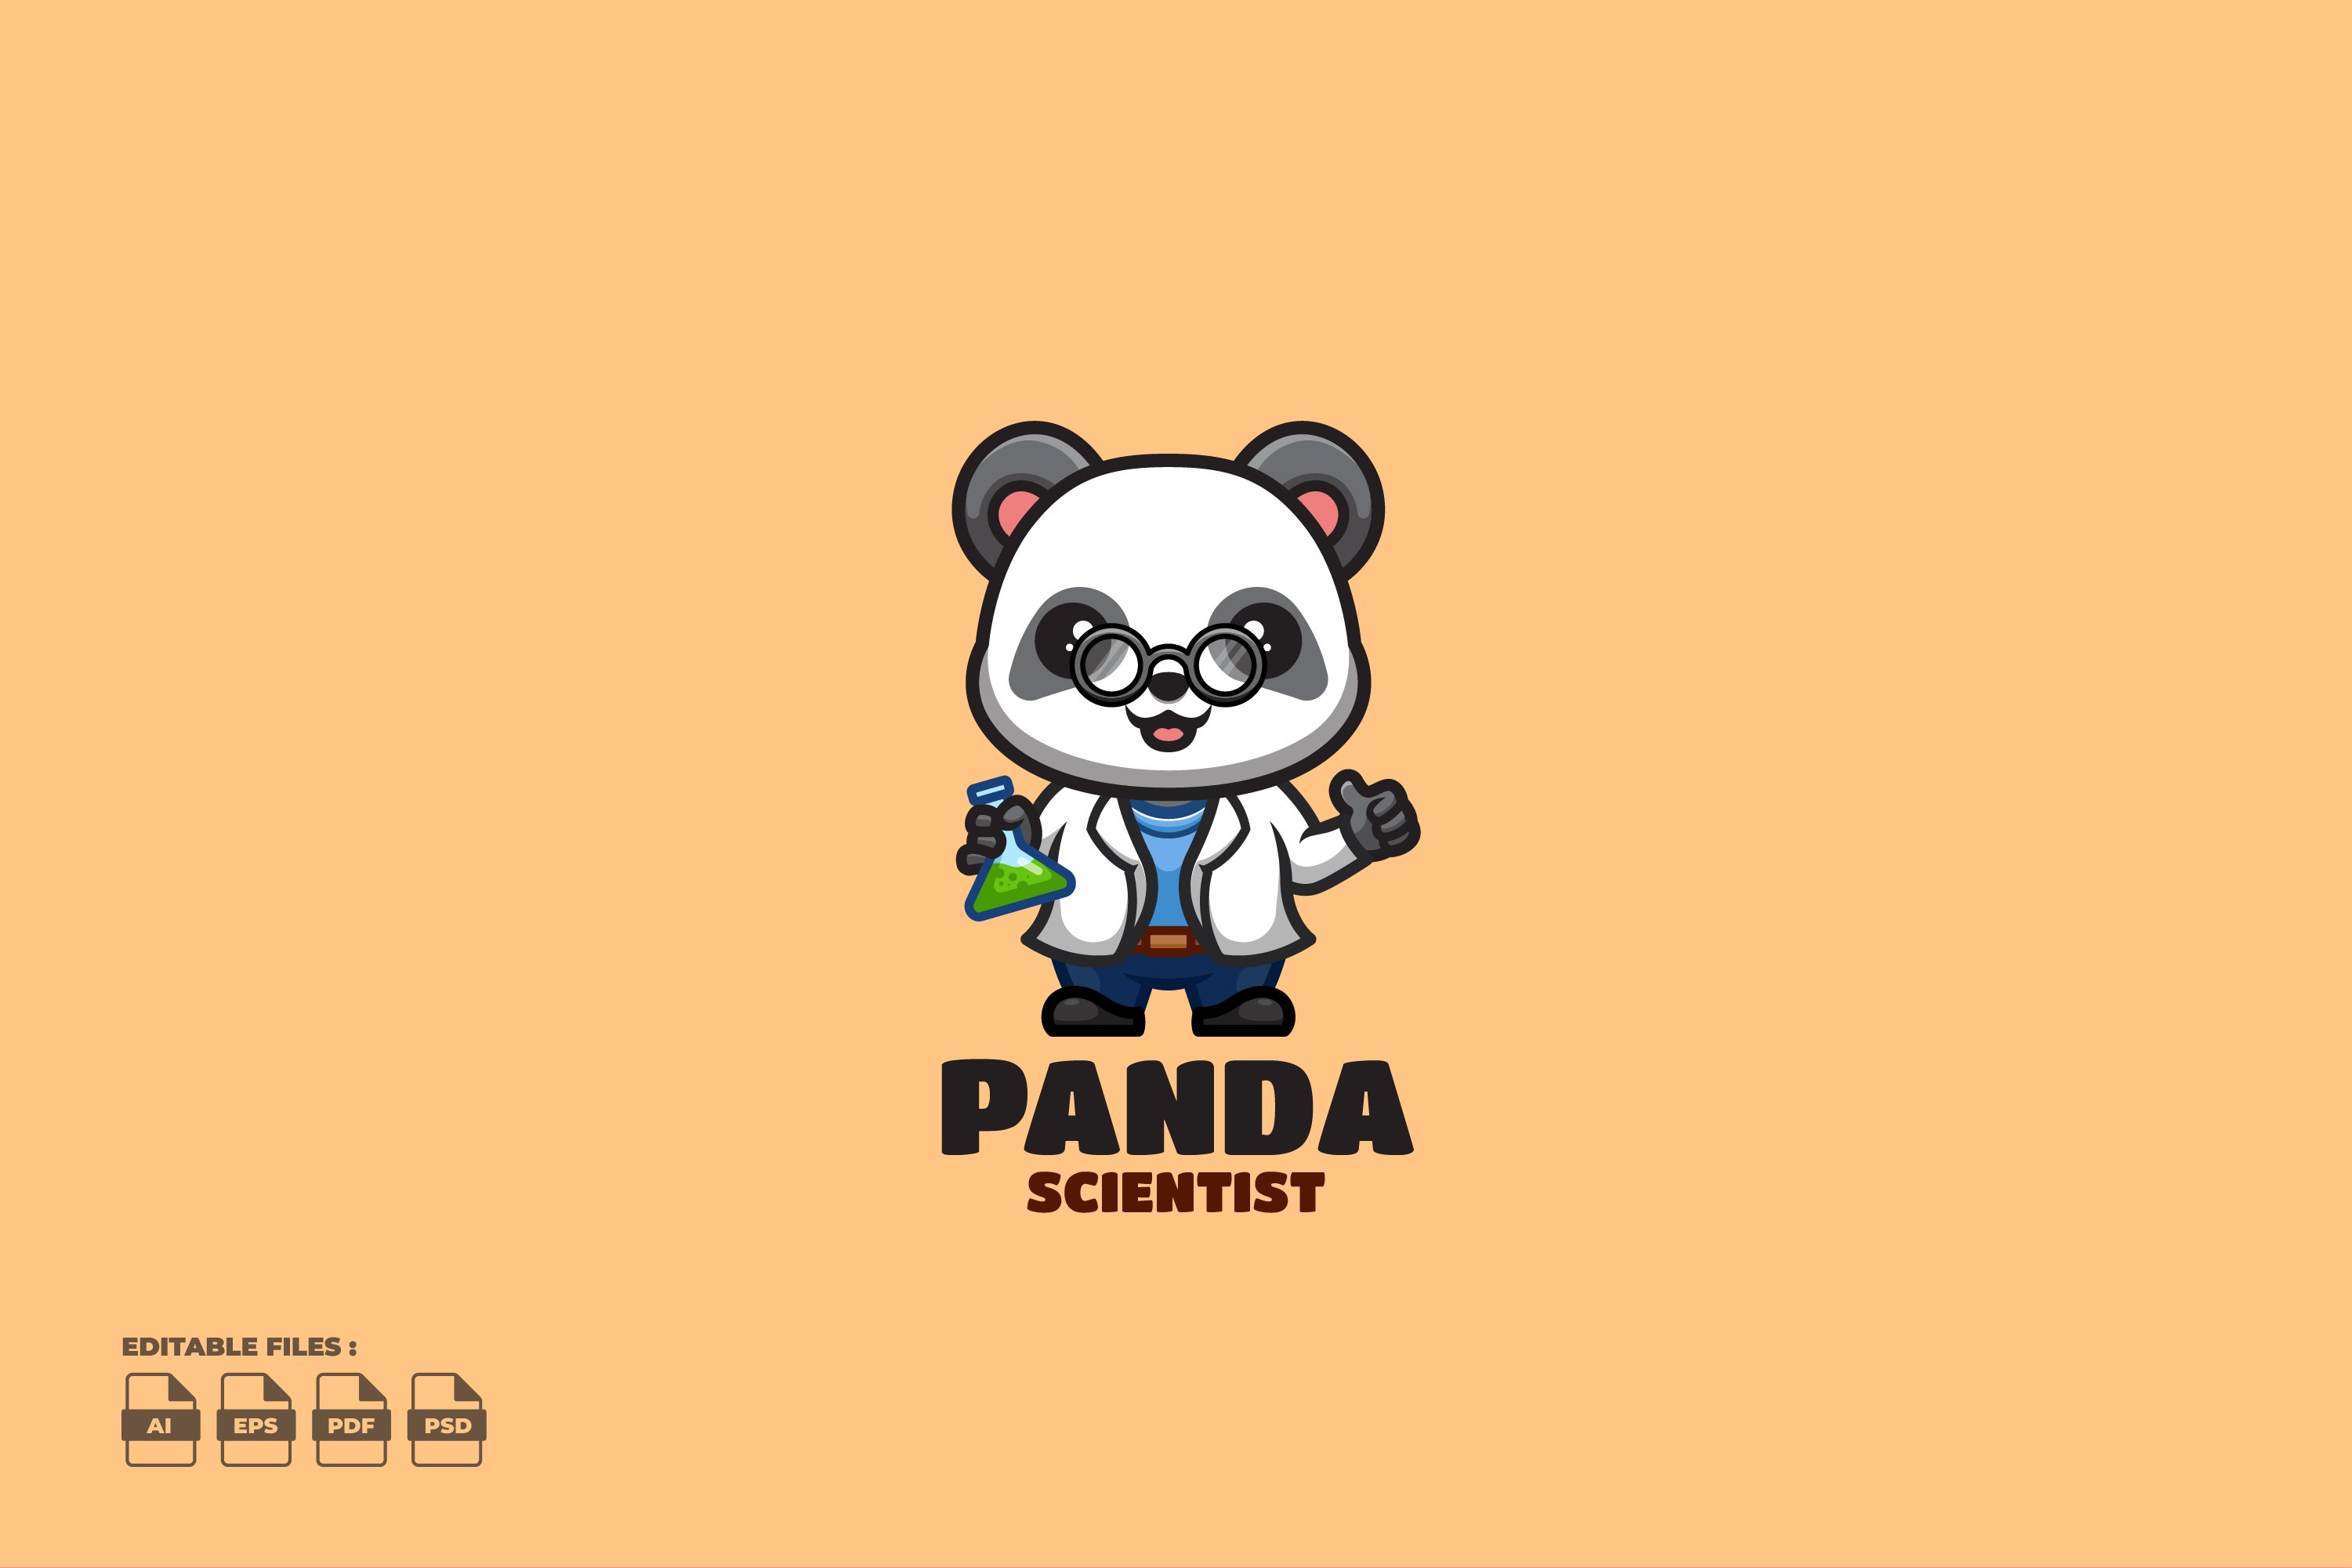 Scientist Panda Cute Mascot Logo cover image.